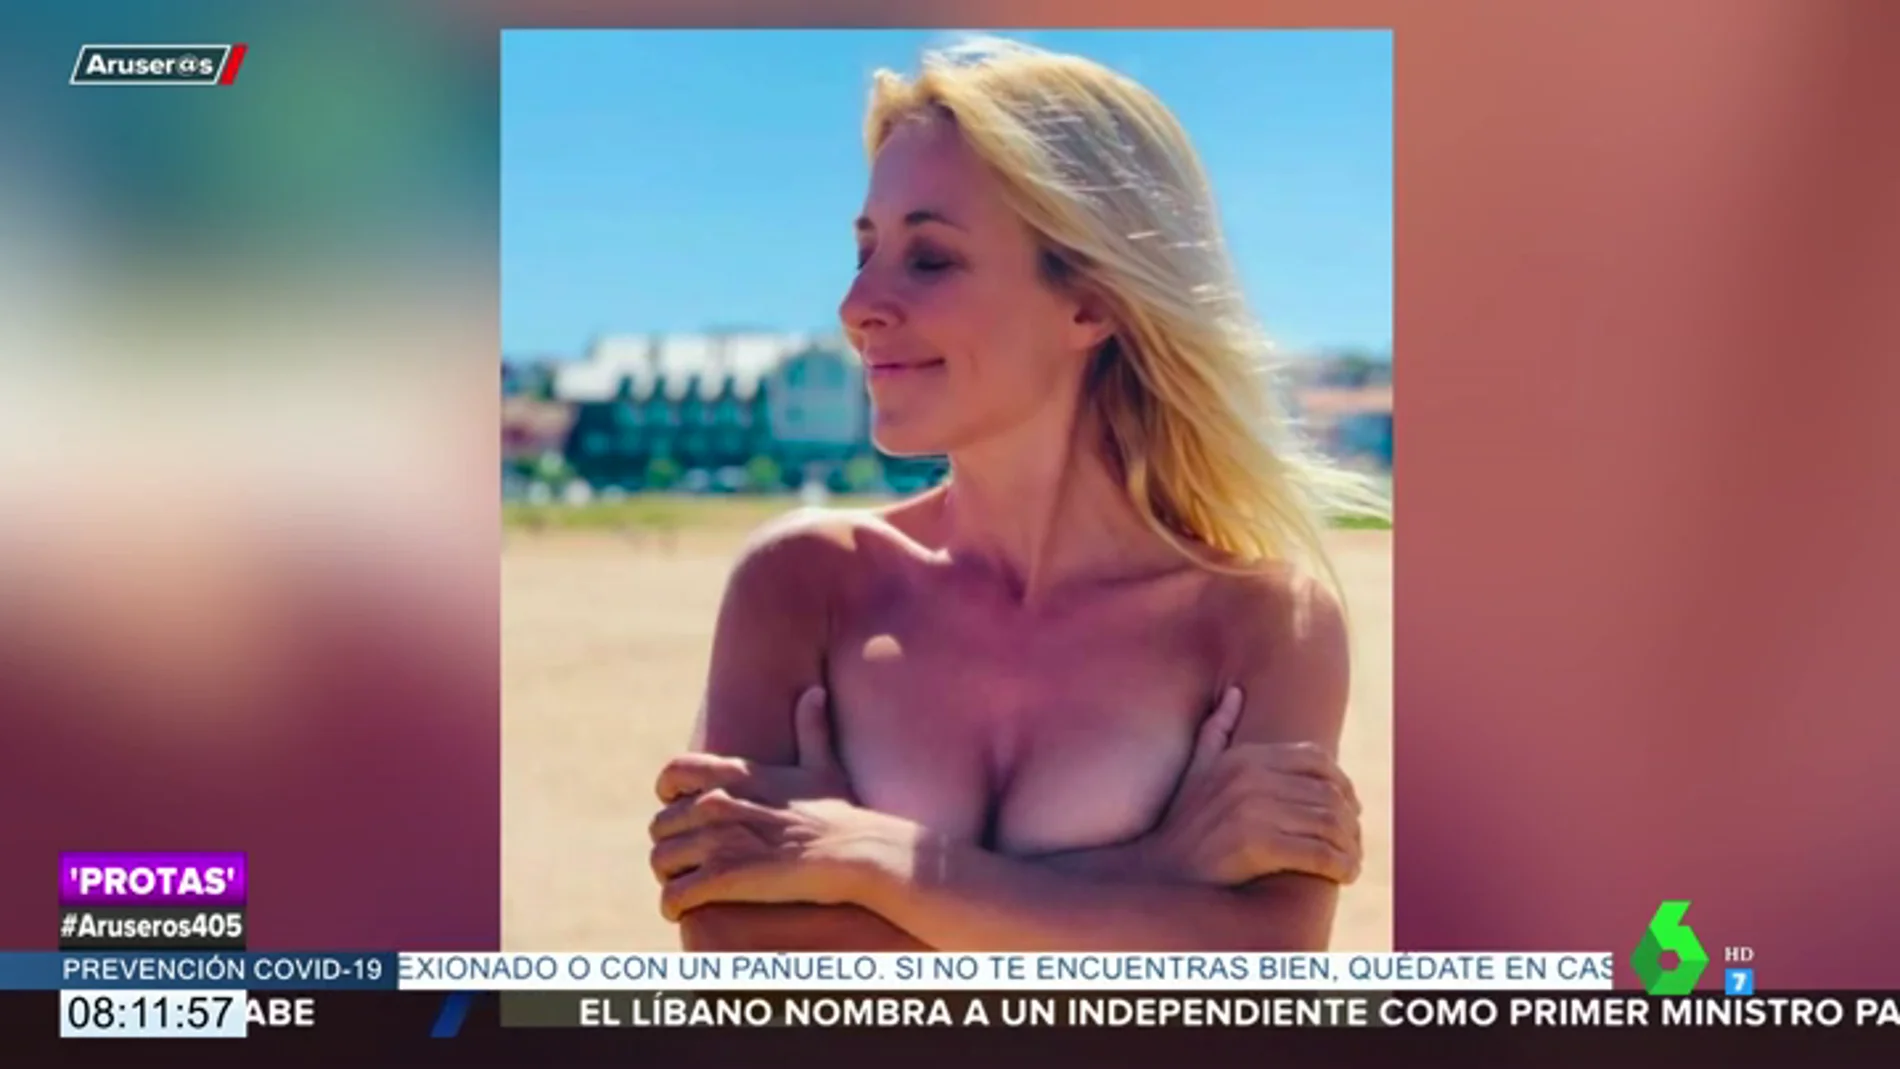 El espectacular topless censurado de Cayetana Guillén Cuervo